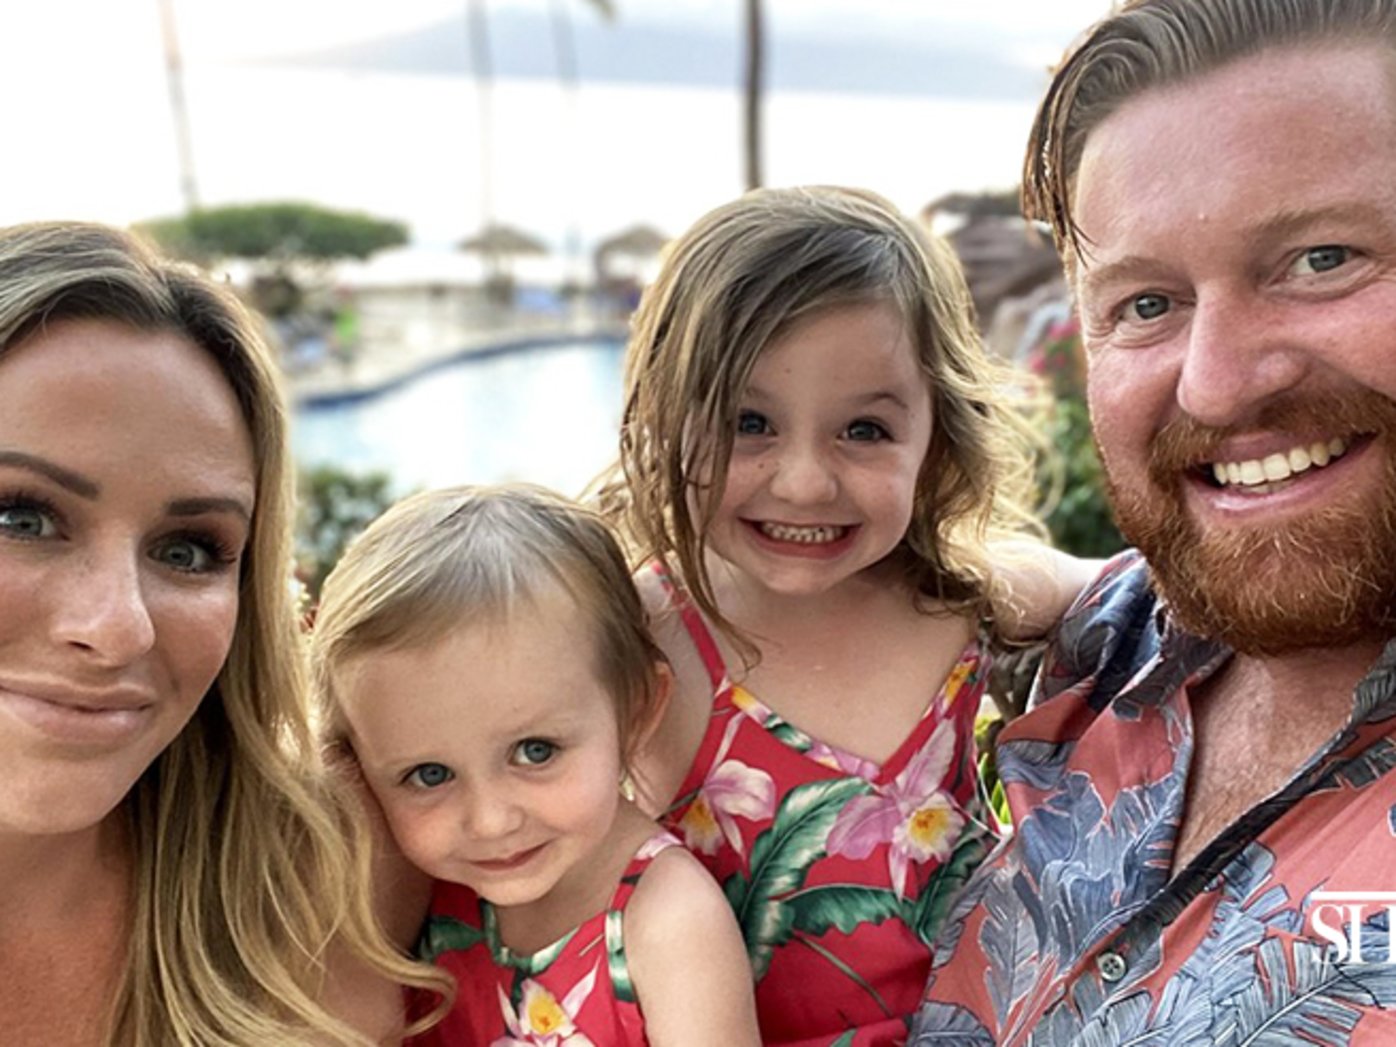 Sarah, Mishka, Livley and Chris Kelly, enjoyed a vacation together just 2 months after Chris’ hernia repair surgery at Sharp Coronado Hospital.